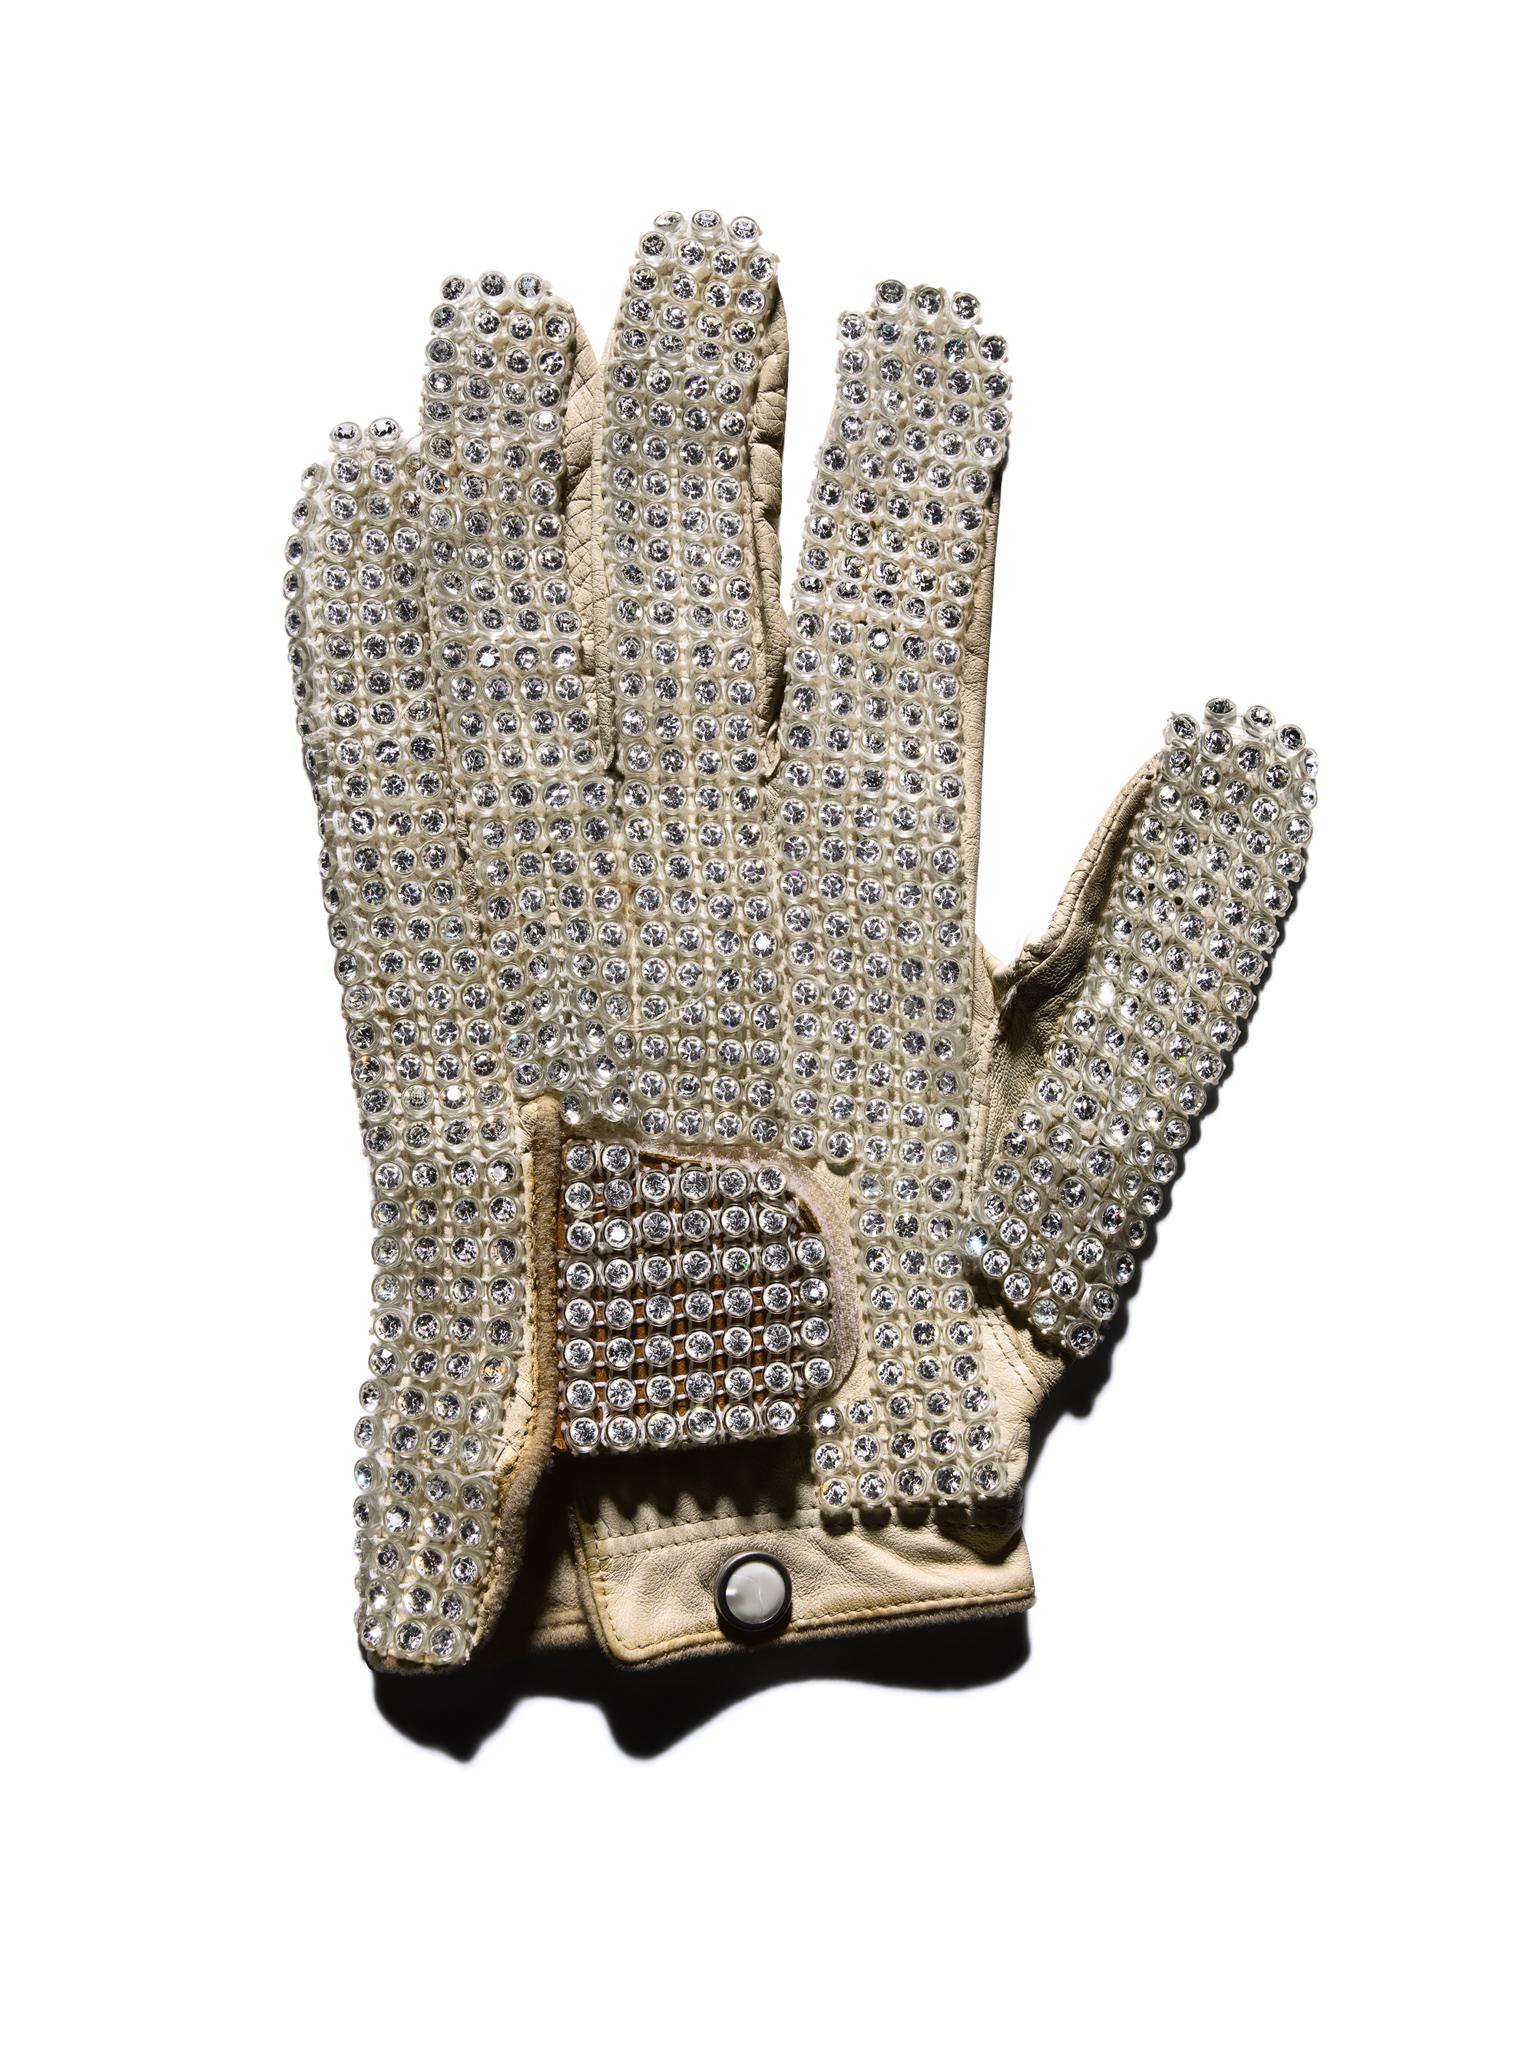 White Glove ( Michael Jackson )  - large format photograph of iconic rhinestones